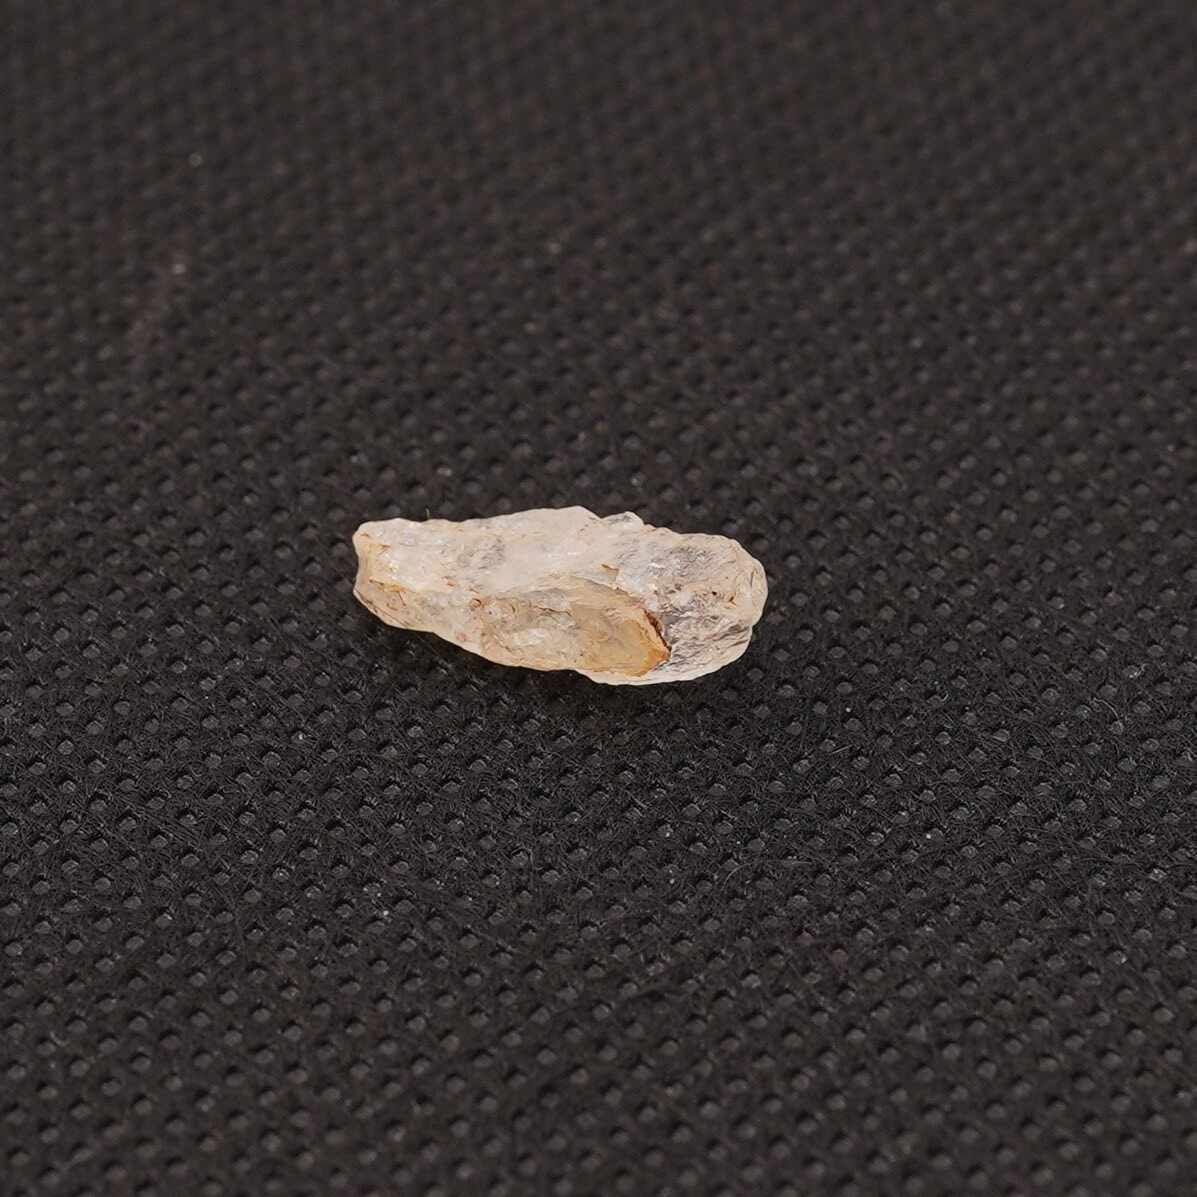 Fenacit nigerian cristal natural unicat f119